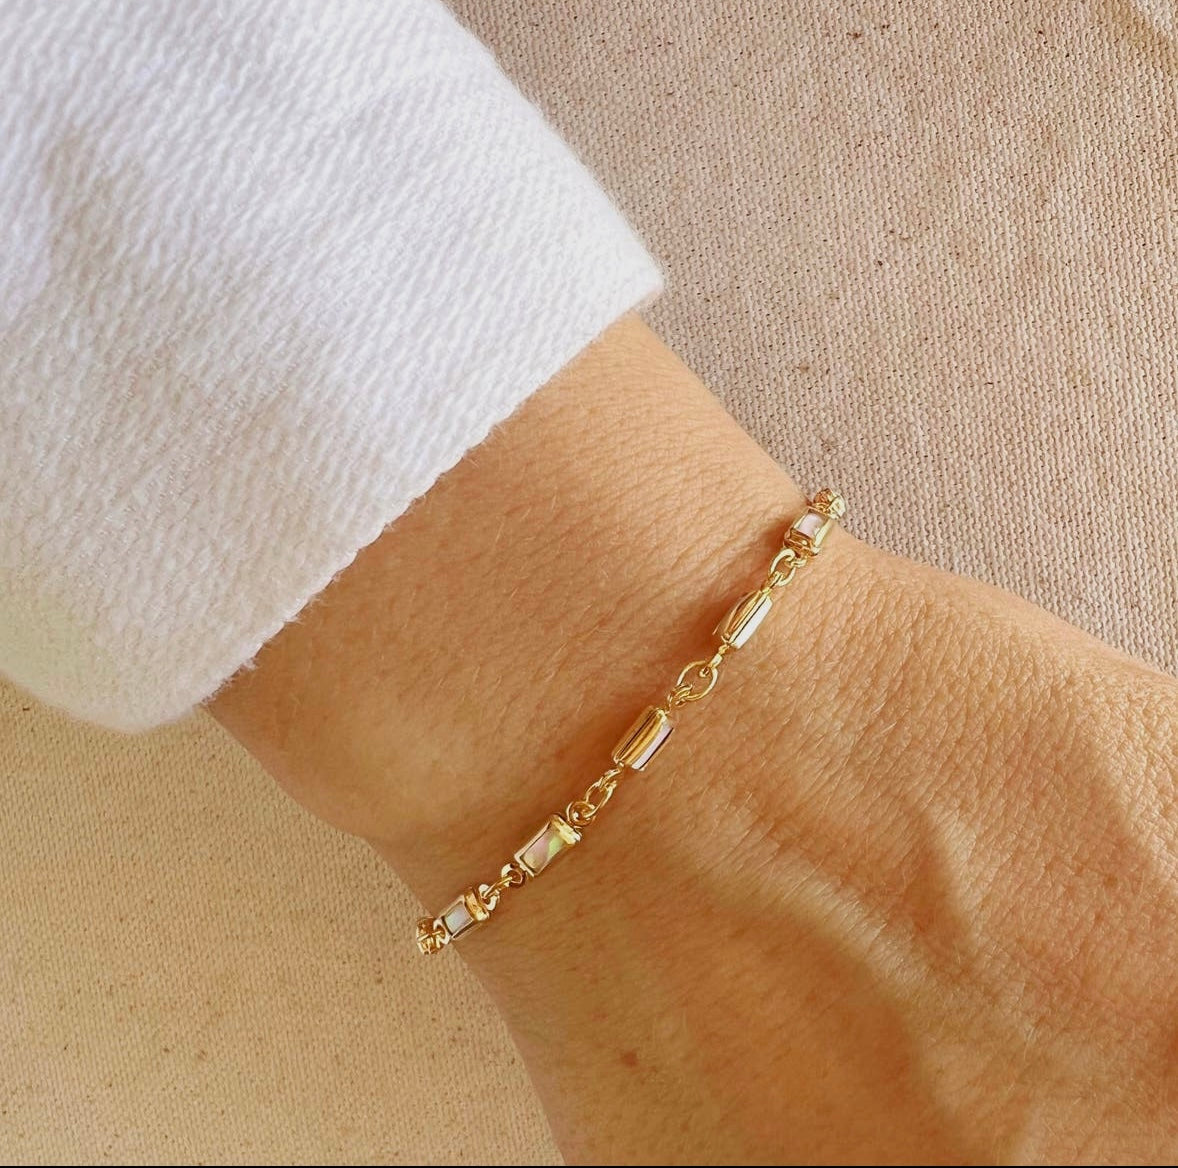 GoldFi Gold Filled Opal Bracelet